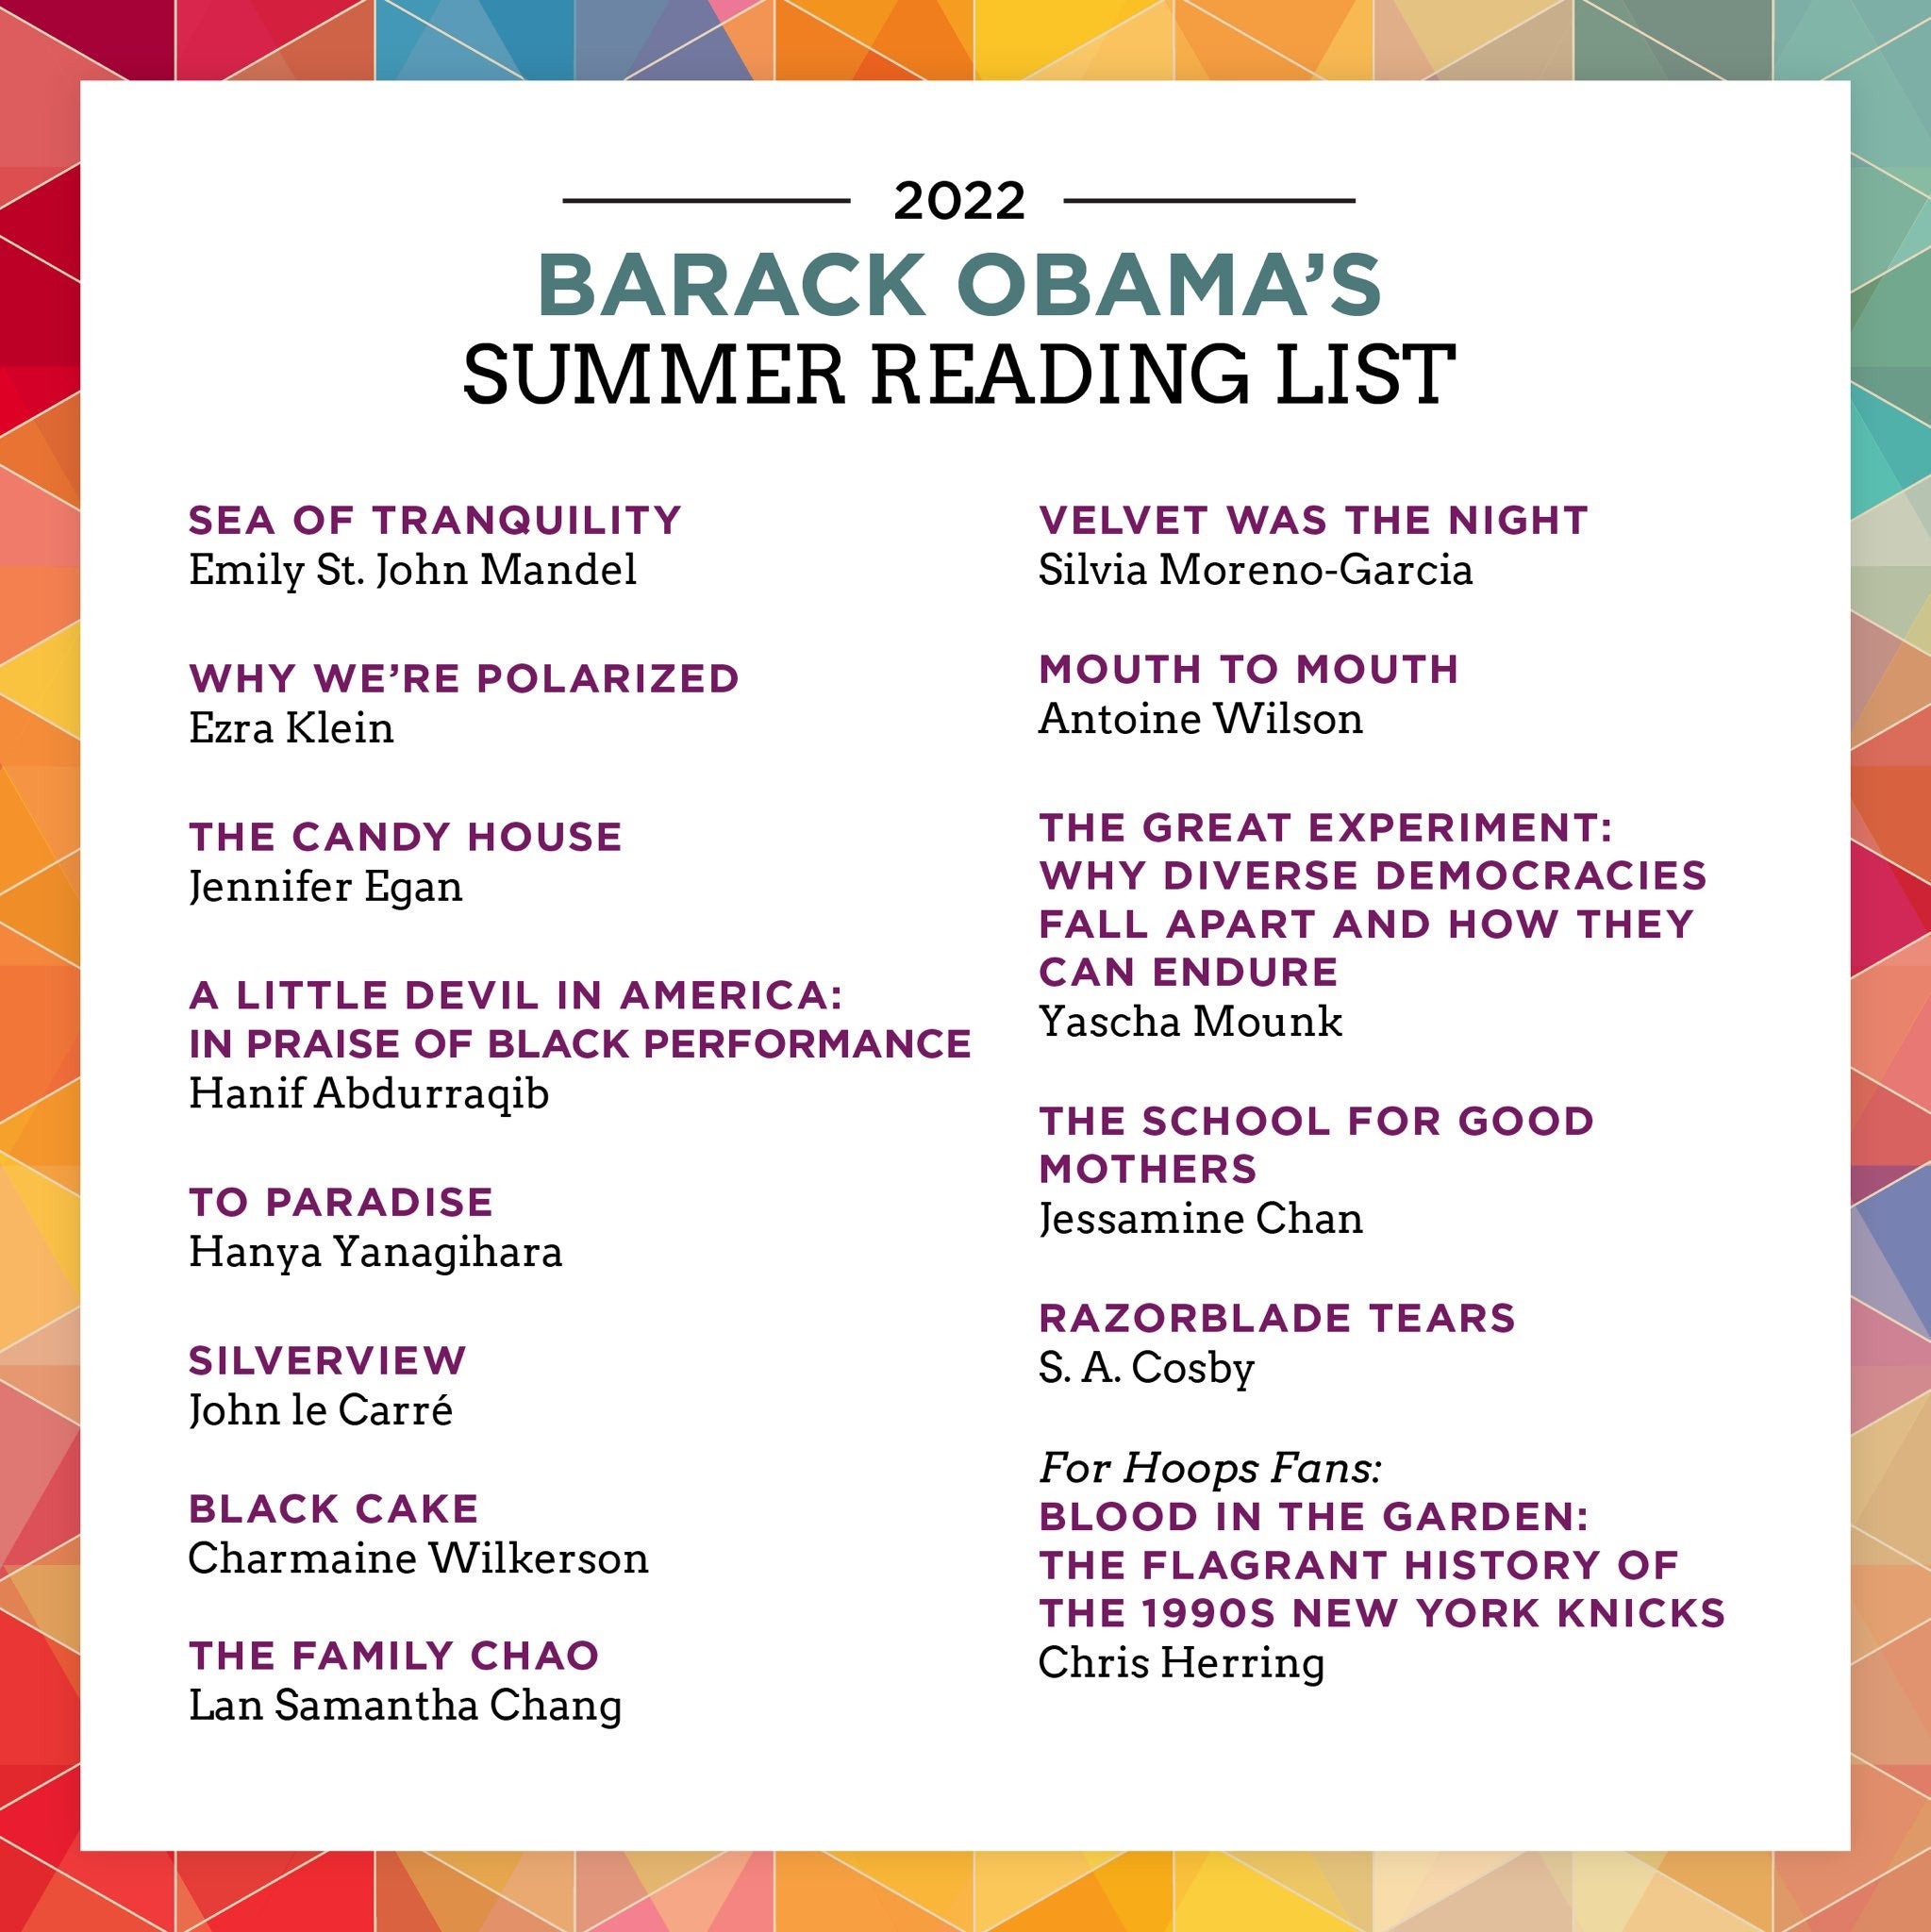 Obama’s Summer Reading List